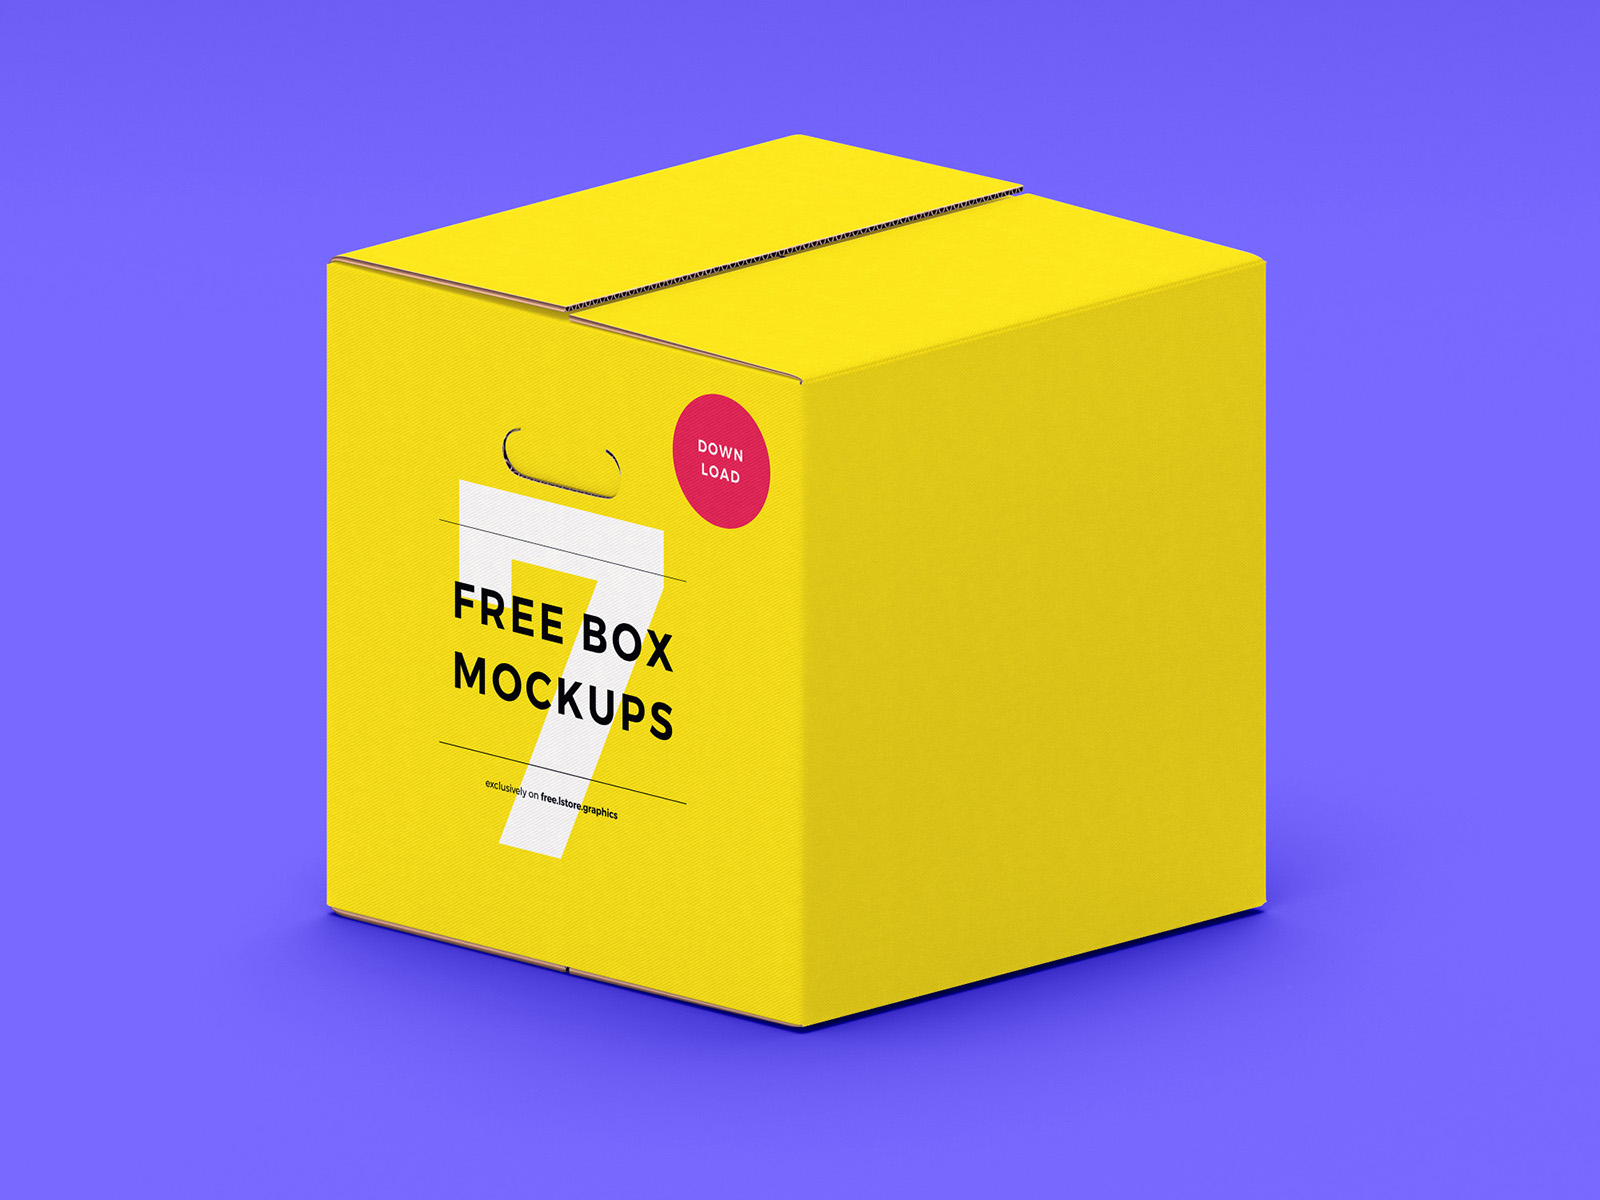 Download 7 Free Box Mockups Photoshop PSD - Best Free Mockups